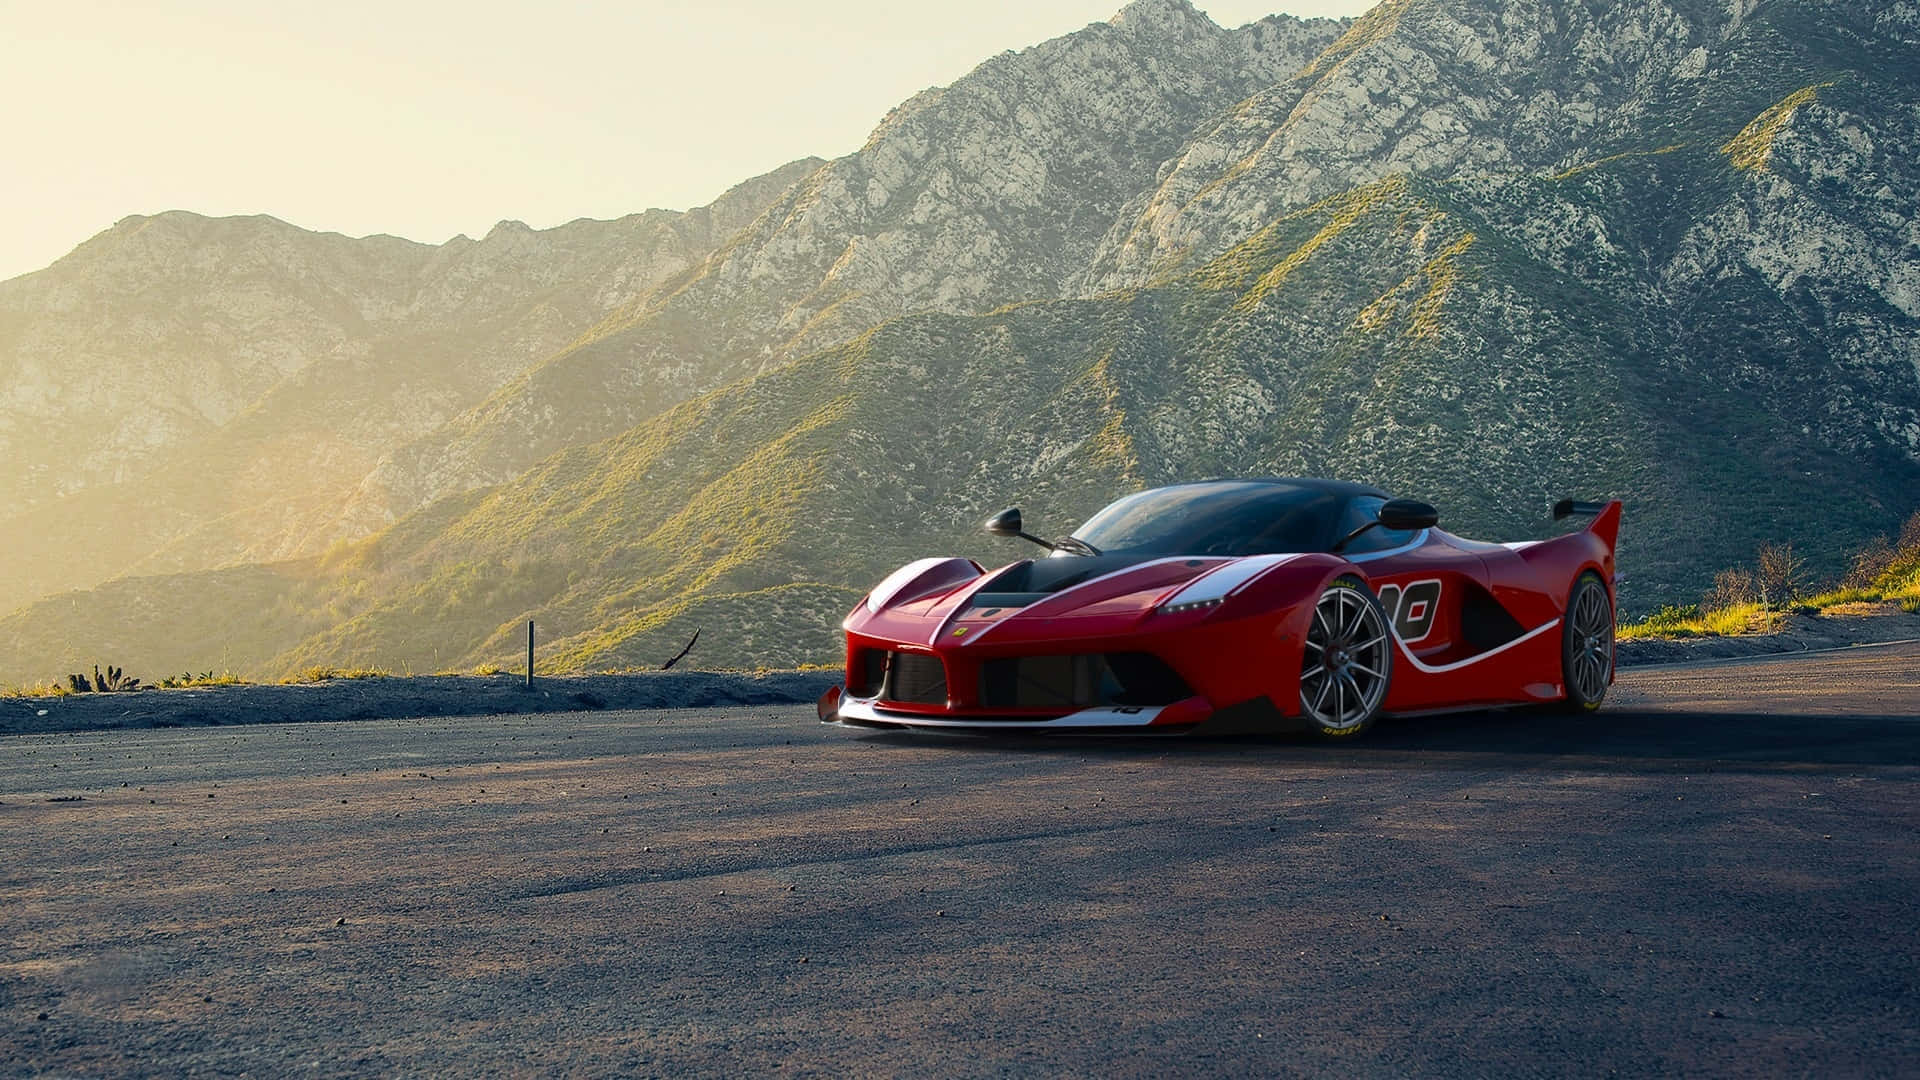 Cool Ferrari Cars - Sheer Luxury On The Roads Wallpaper